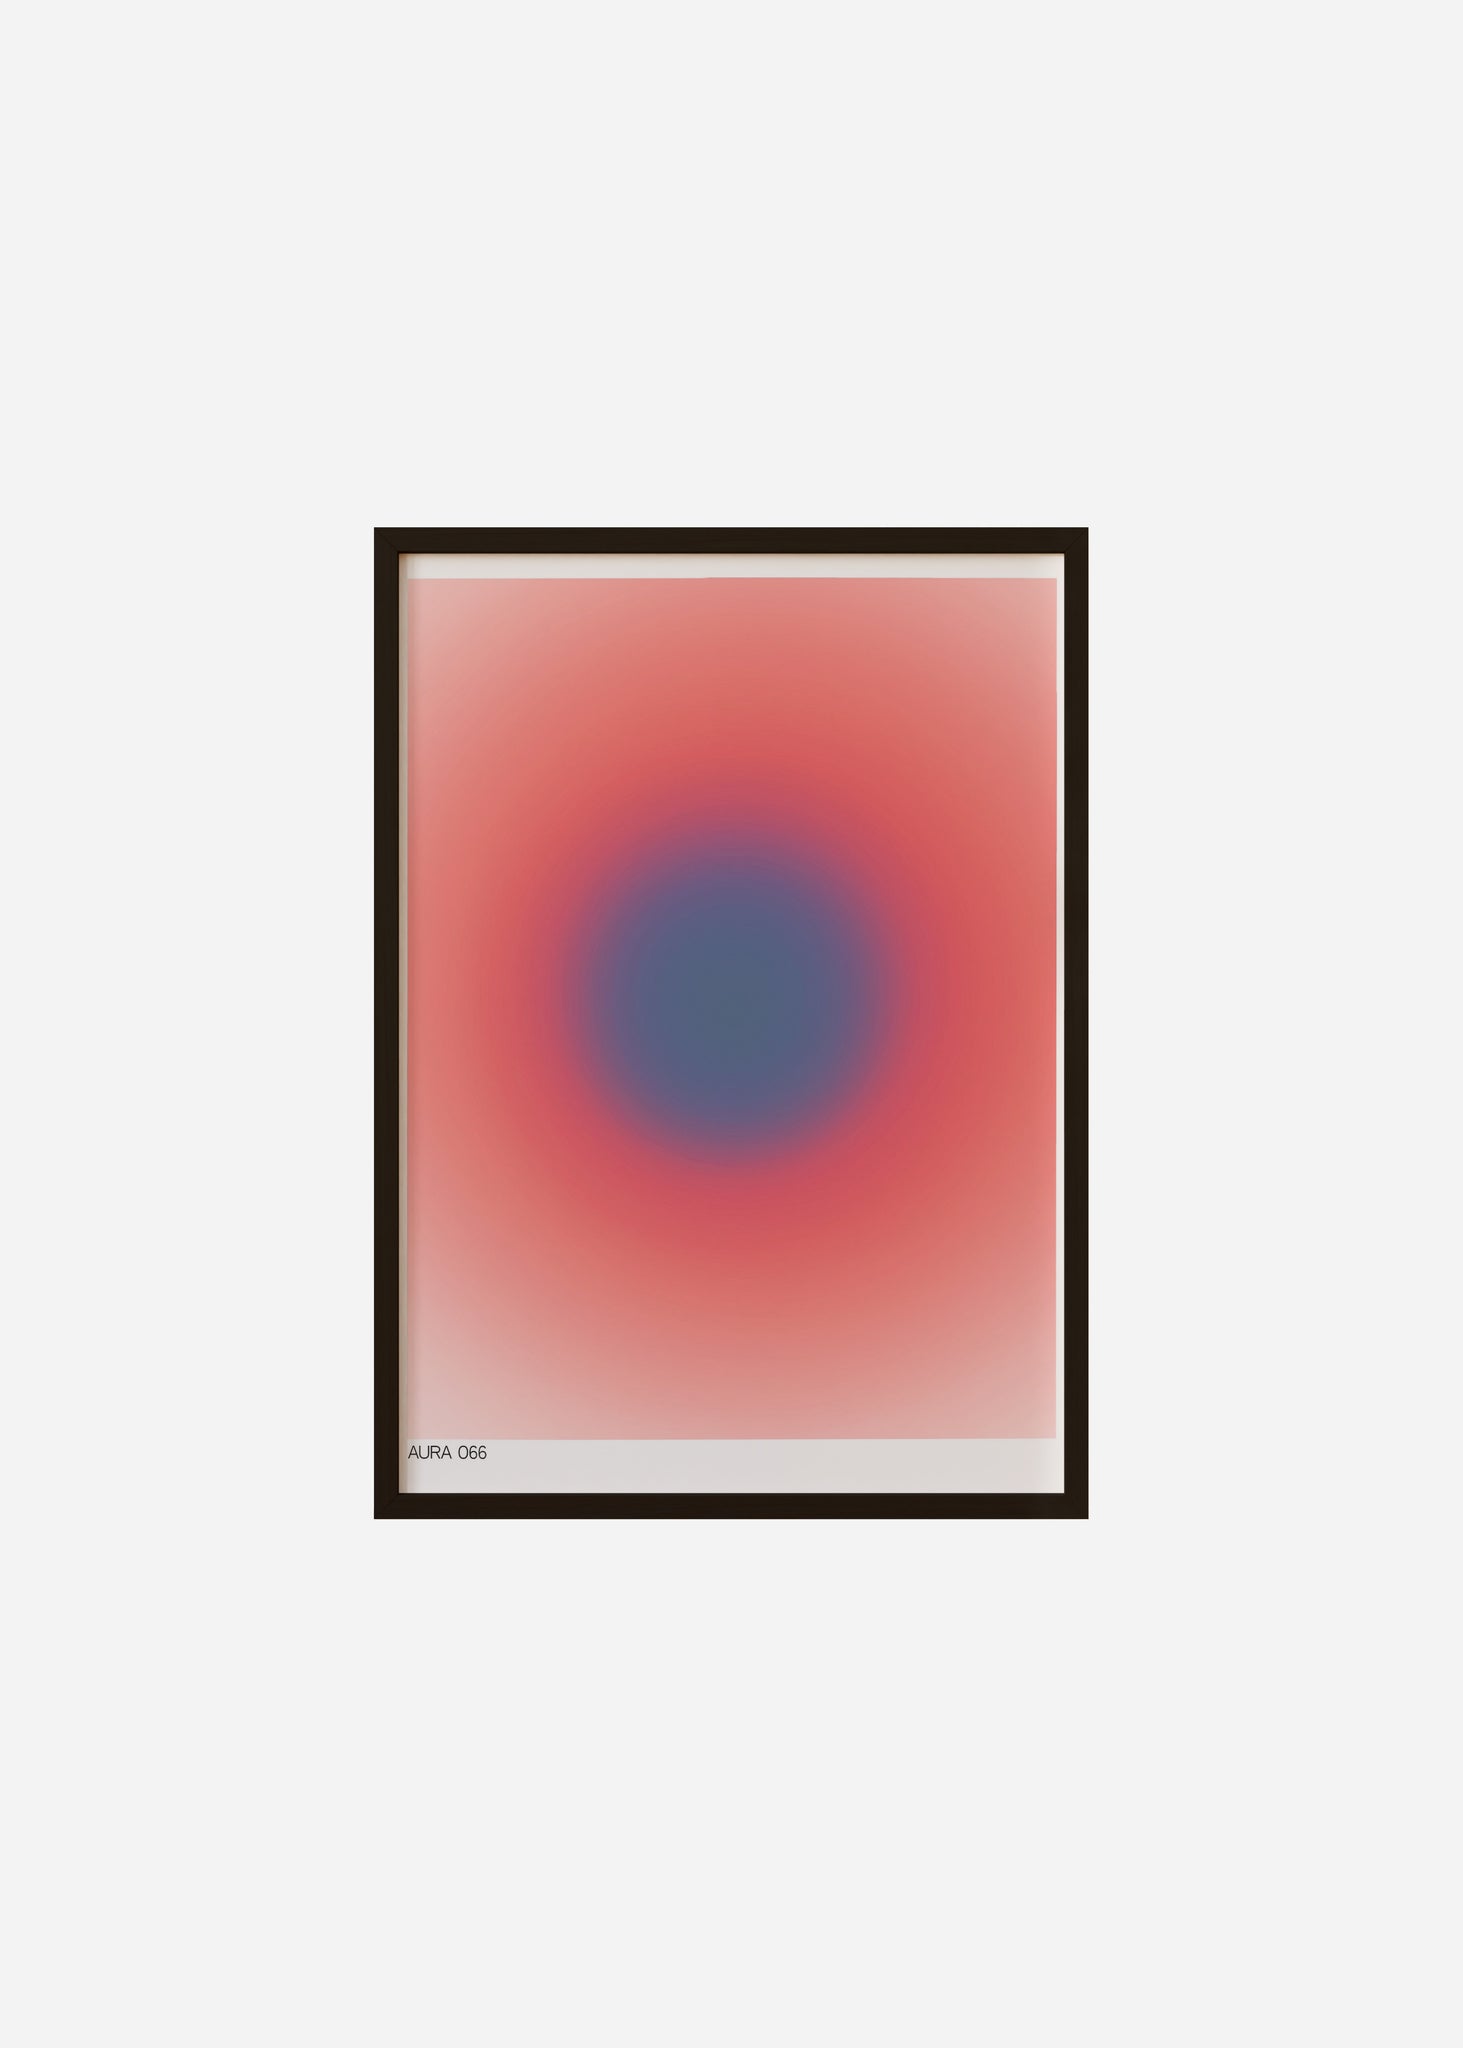 aura 066 Framed Print